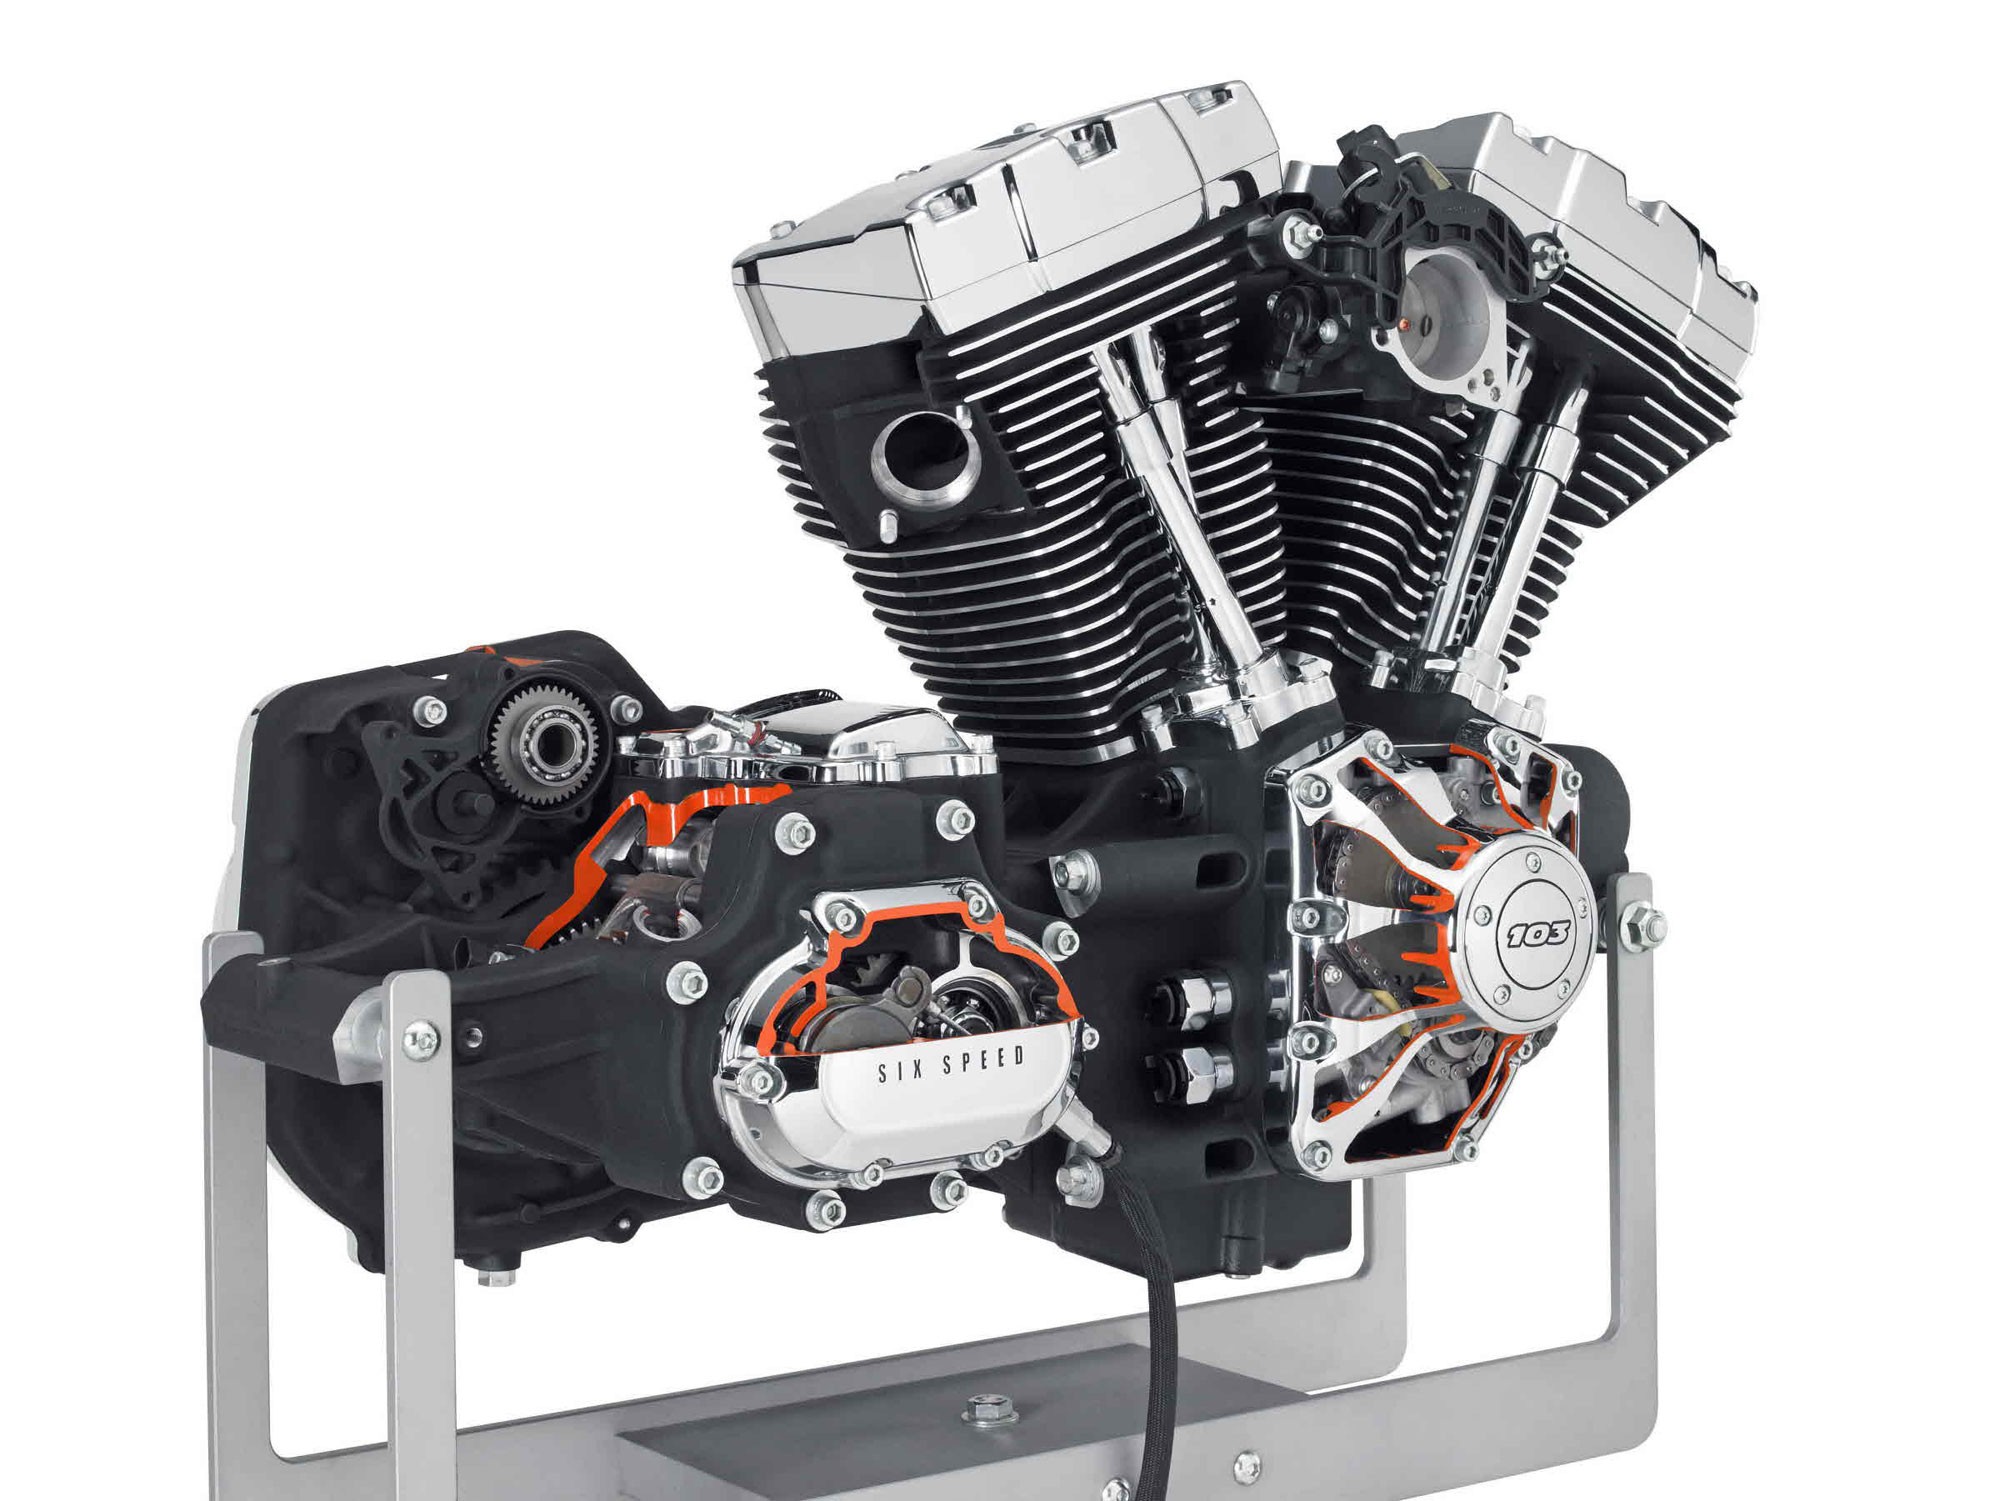 Harley Evo Engine Diagram Harley Evolution Engine Diagram Books Wiring Diagram •